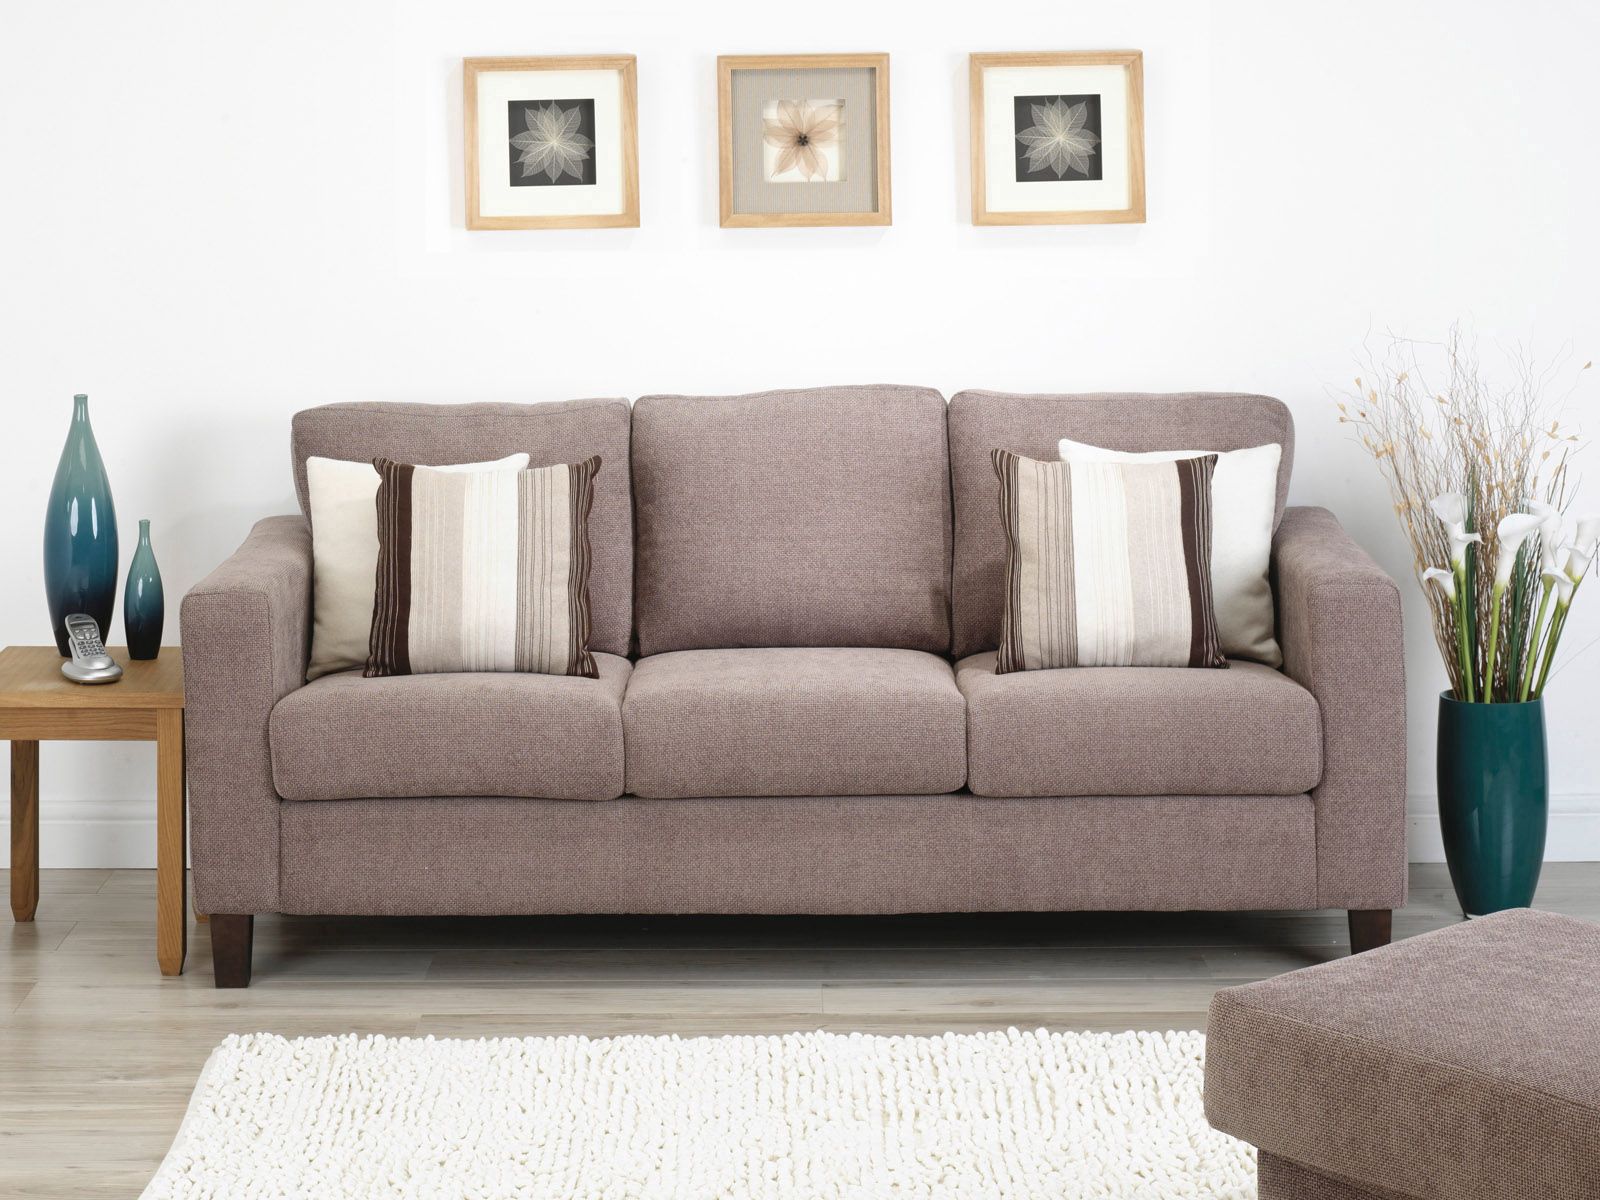 furniture, miscellanea, miscellaneous, sofa, cushions, pillows cellphone